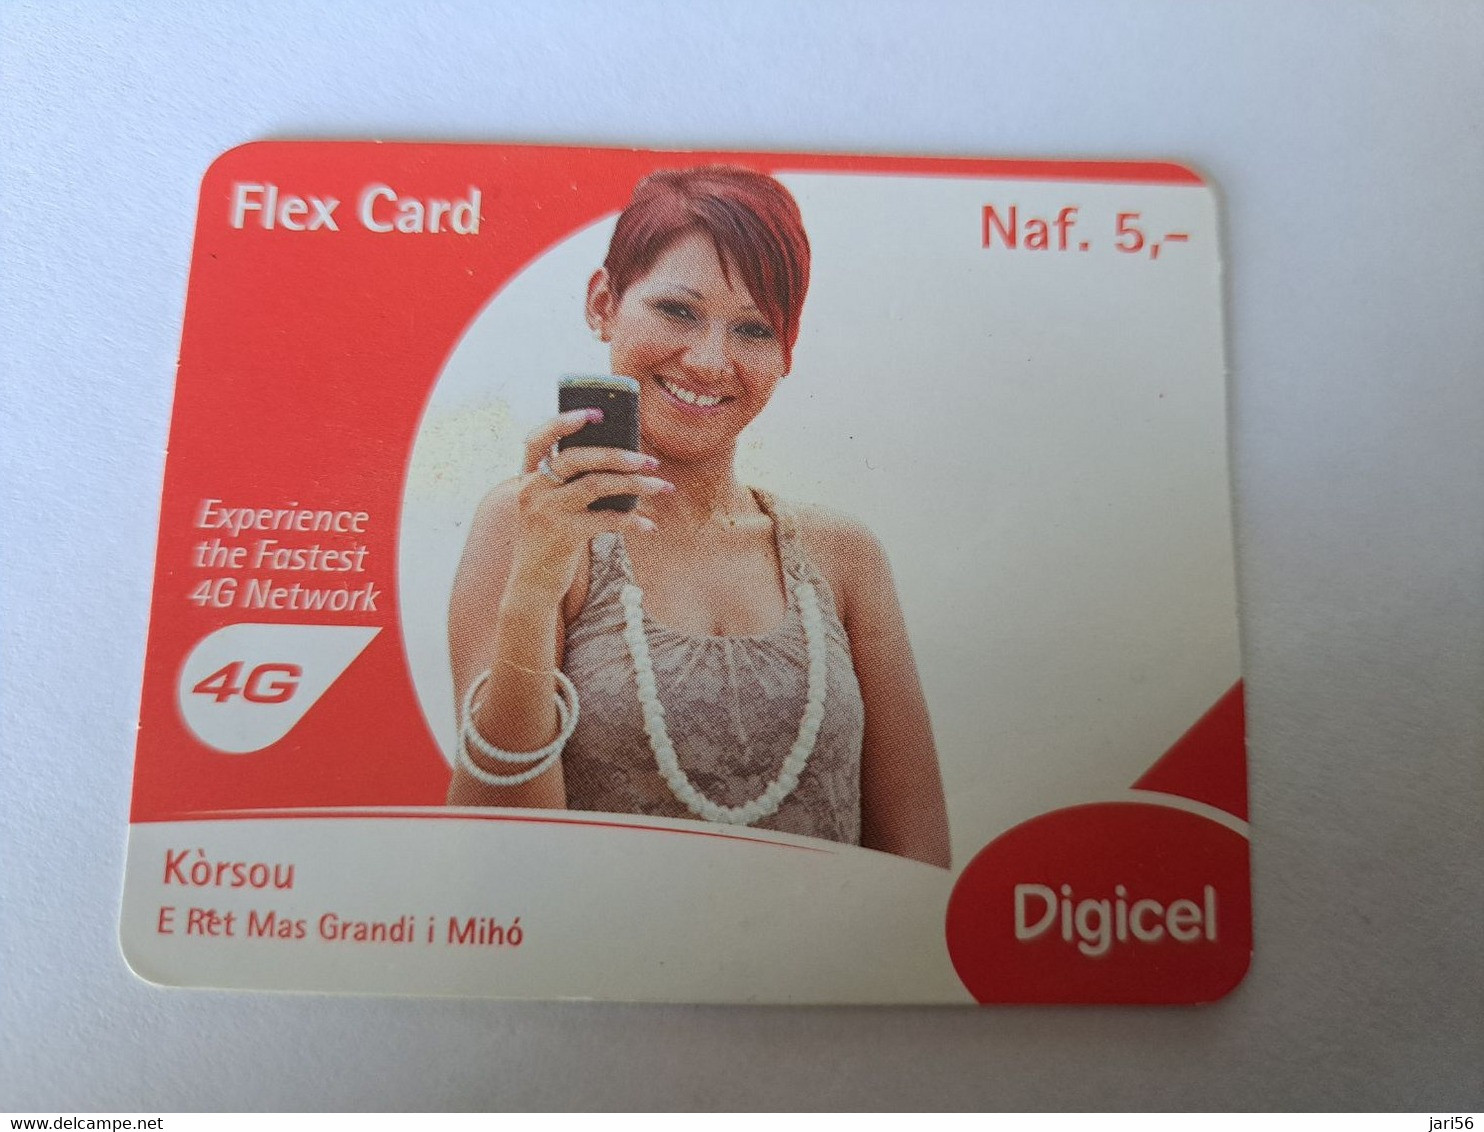 CURACAO  DIGICEL FLEX CARD  NAF 5,-  LADY ON PHONE    DATE 30/06/2013   VERY FINE USED CARD        ** 12087** - Antillen (Niederländische)